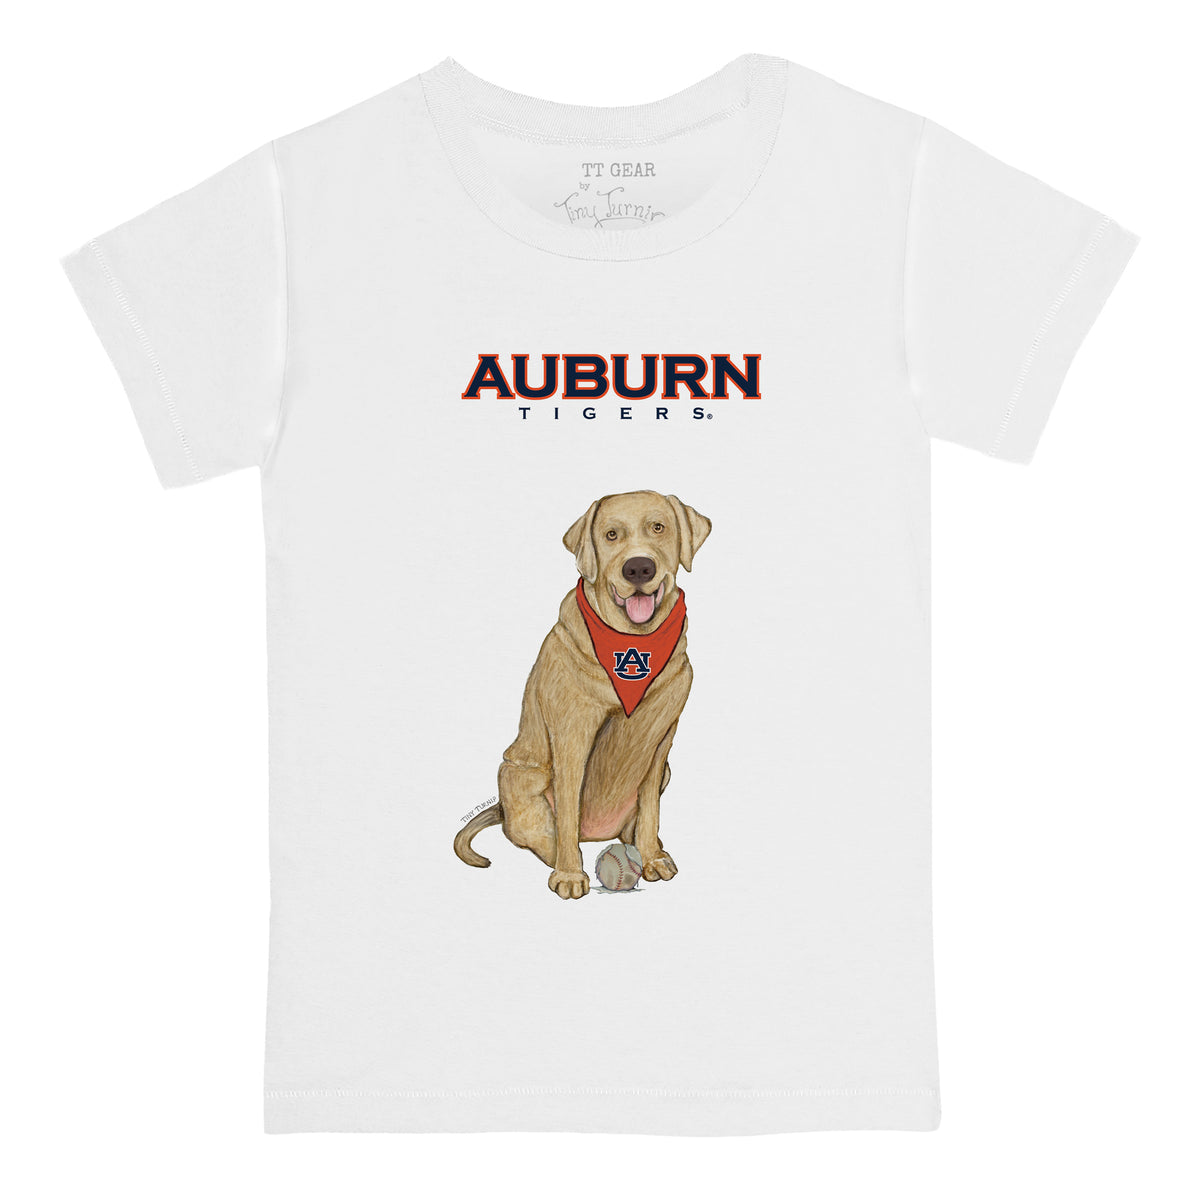 Auburn Tigers Yellow Labrador Retriever Tee Shirt